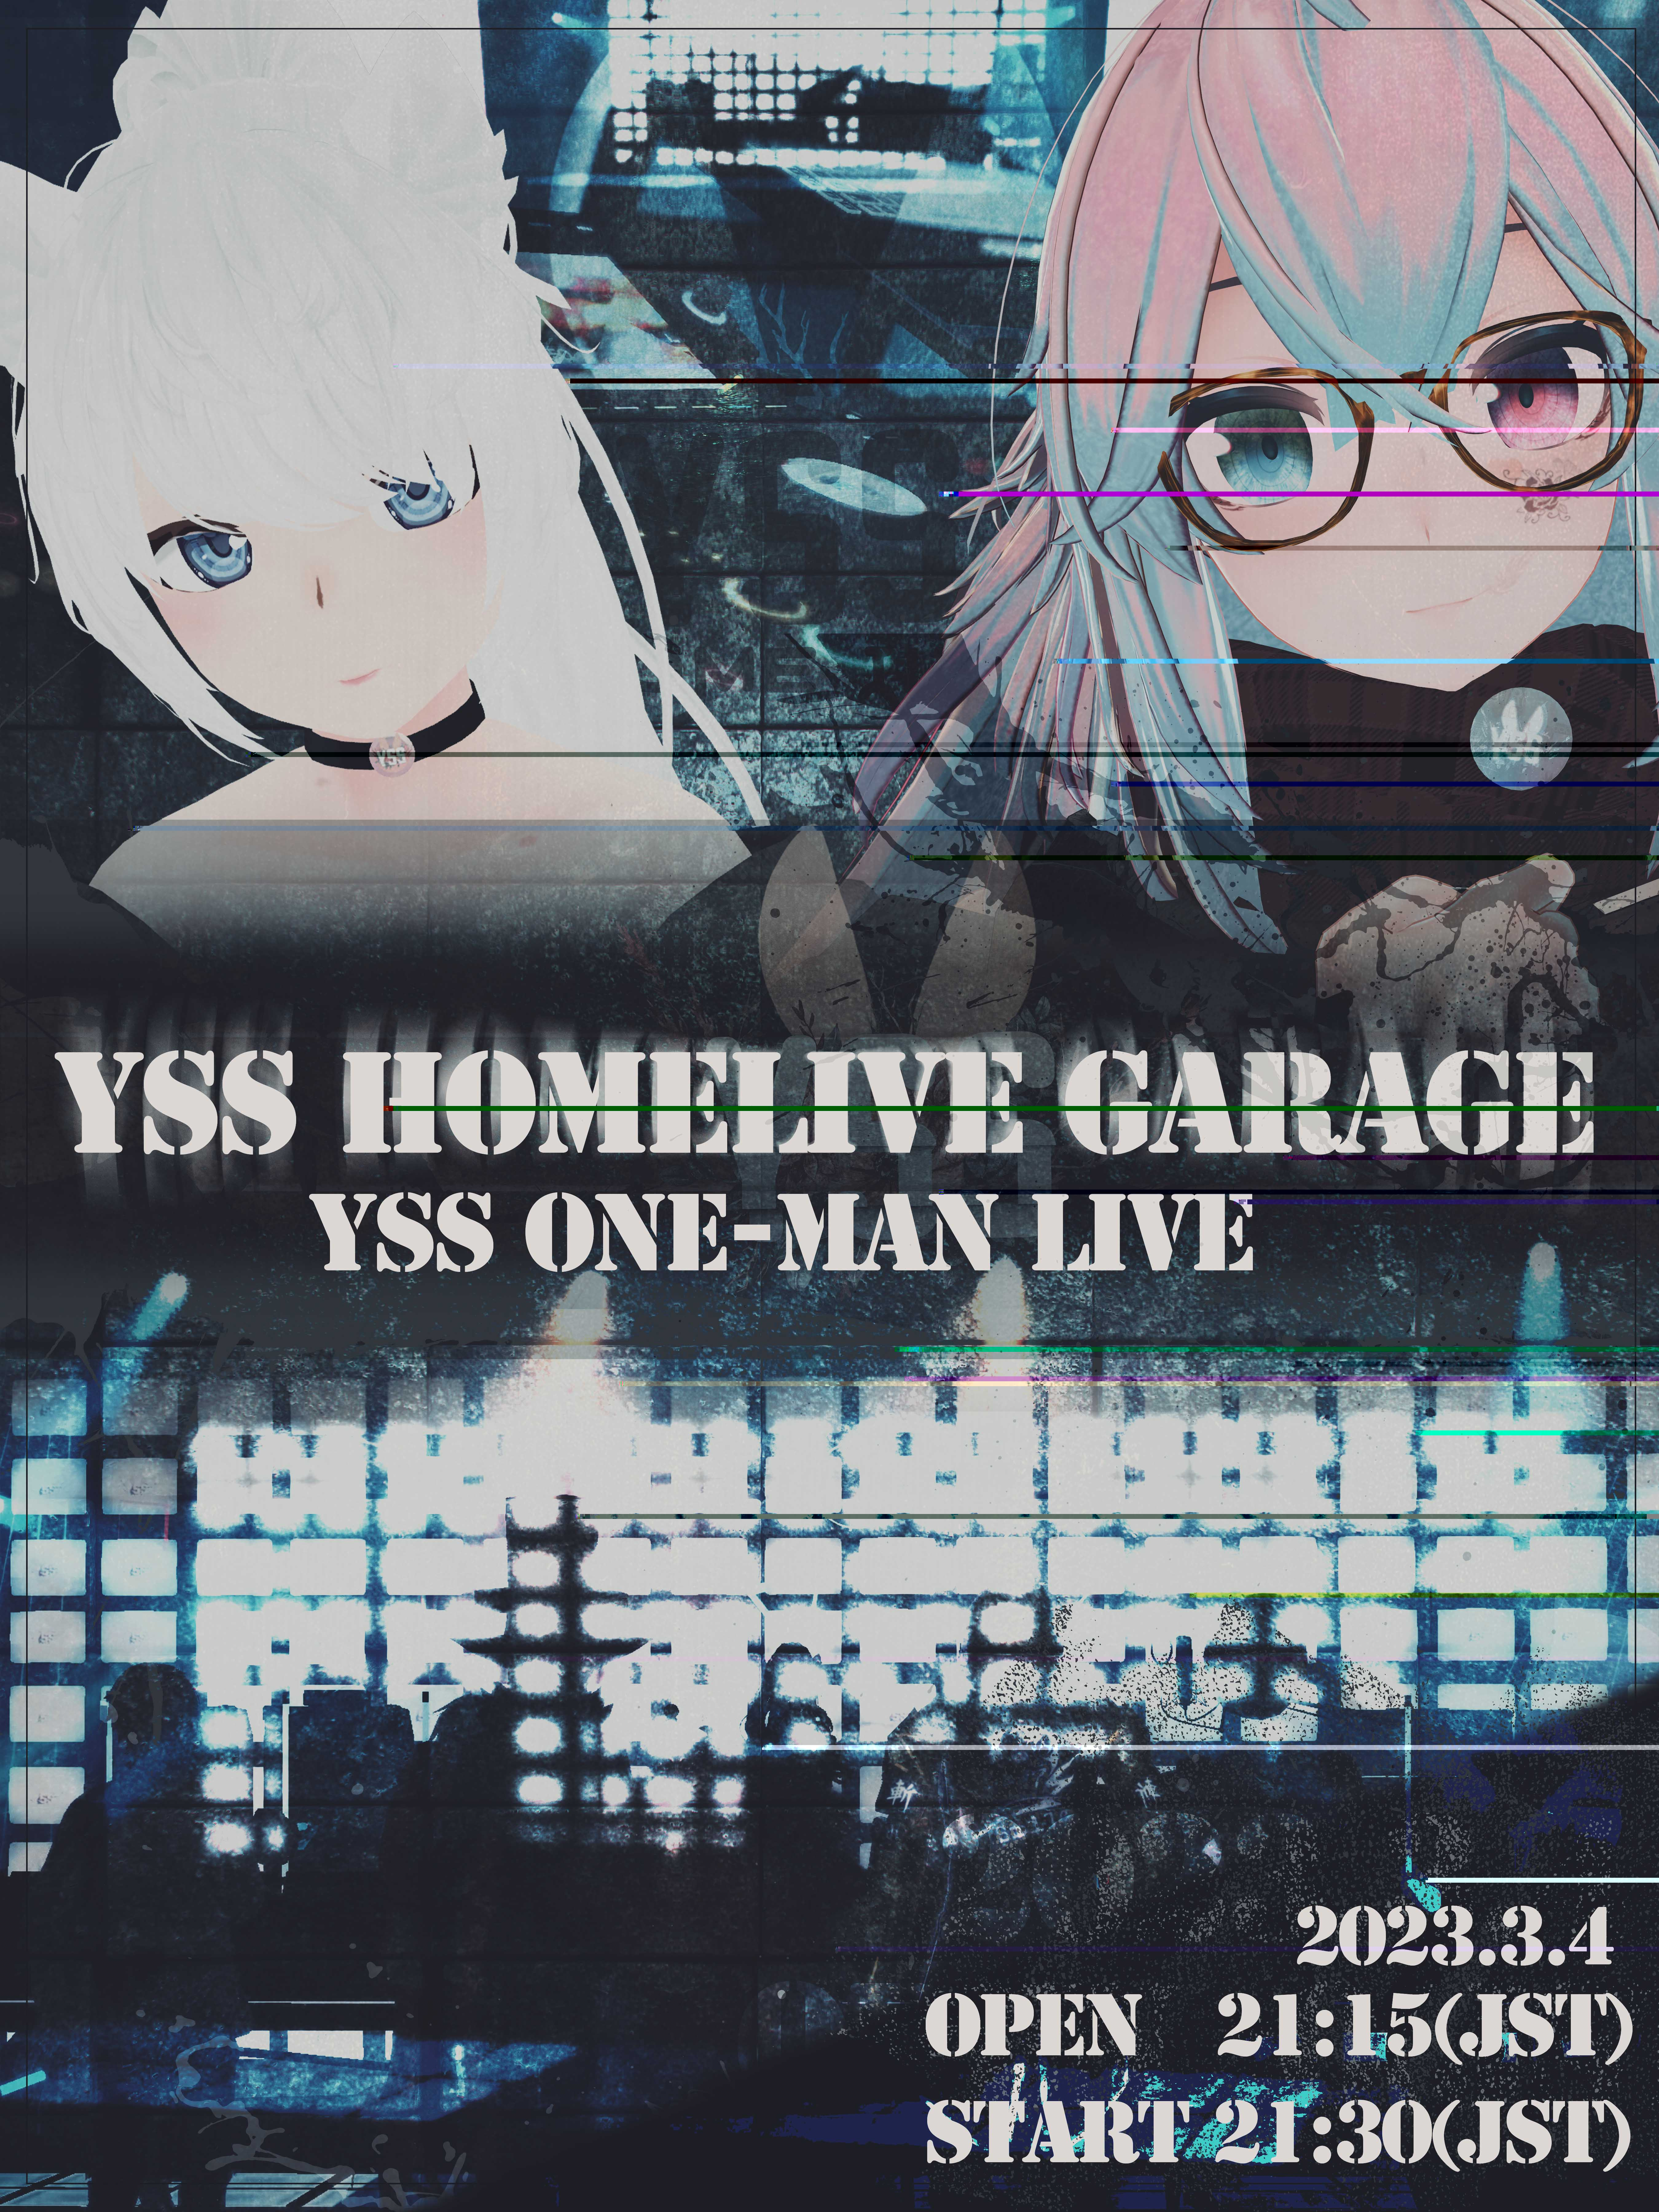 YSS HomeLive -GARAGE- 2.0